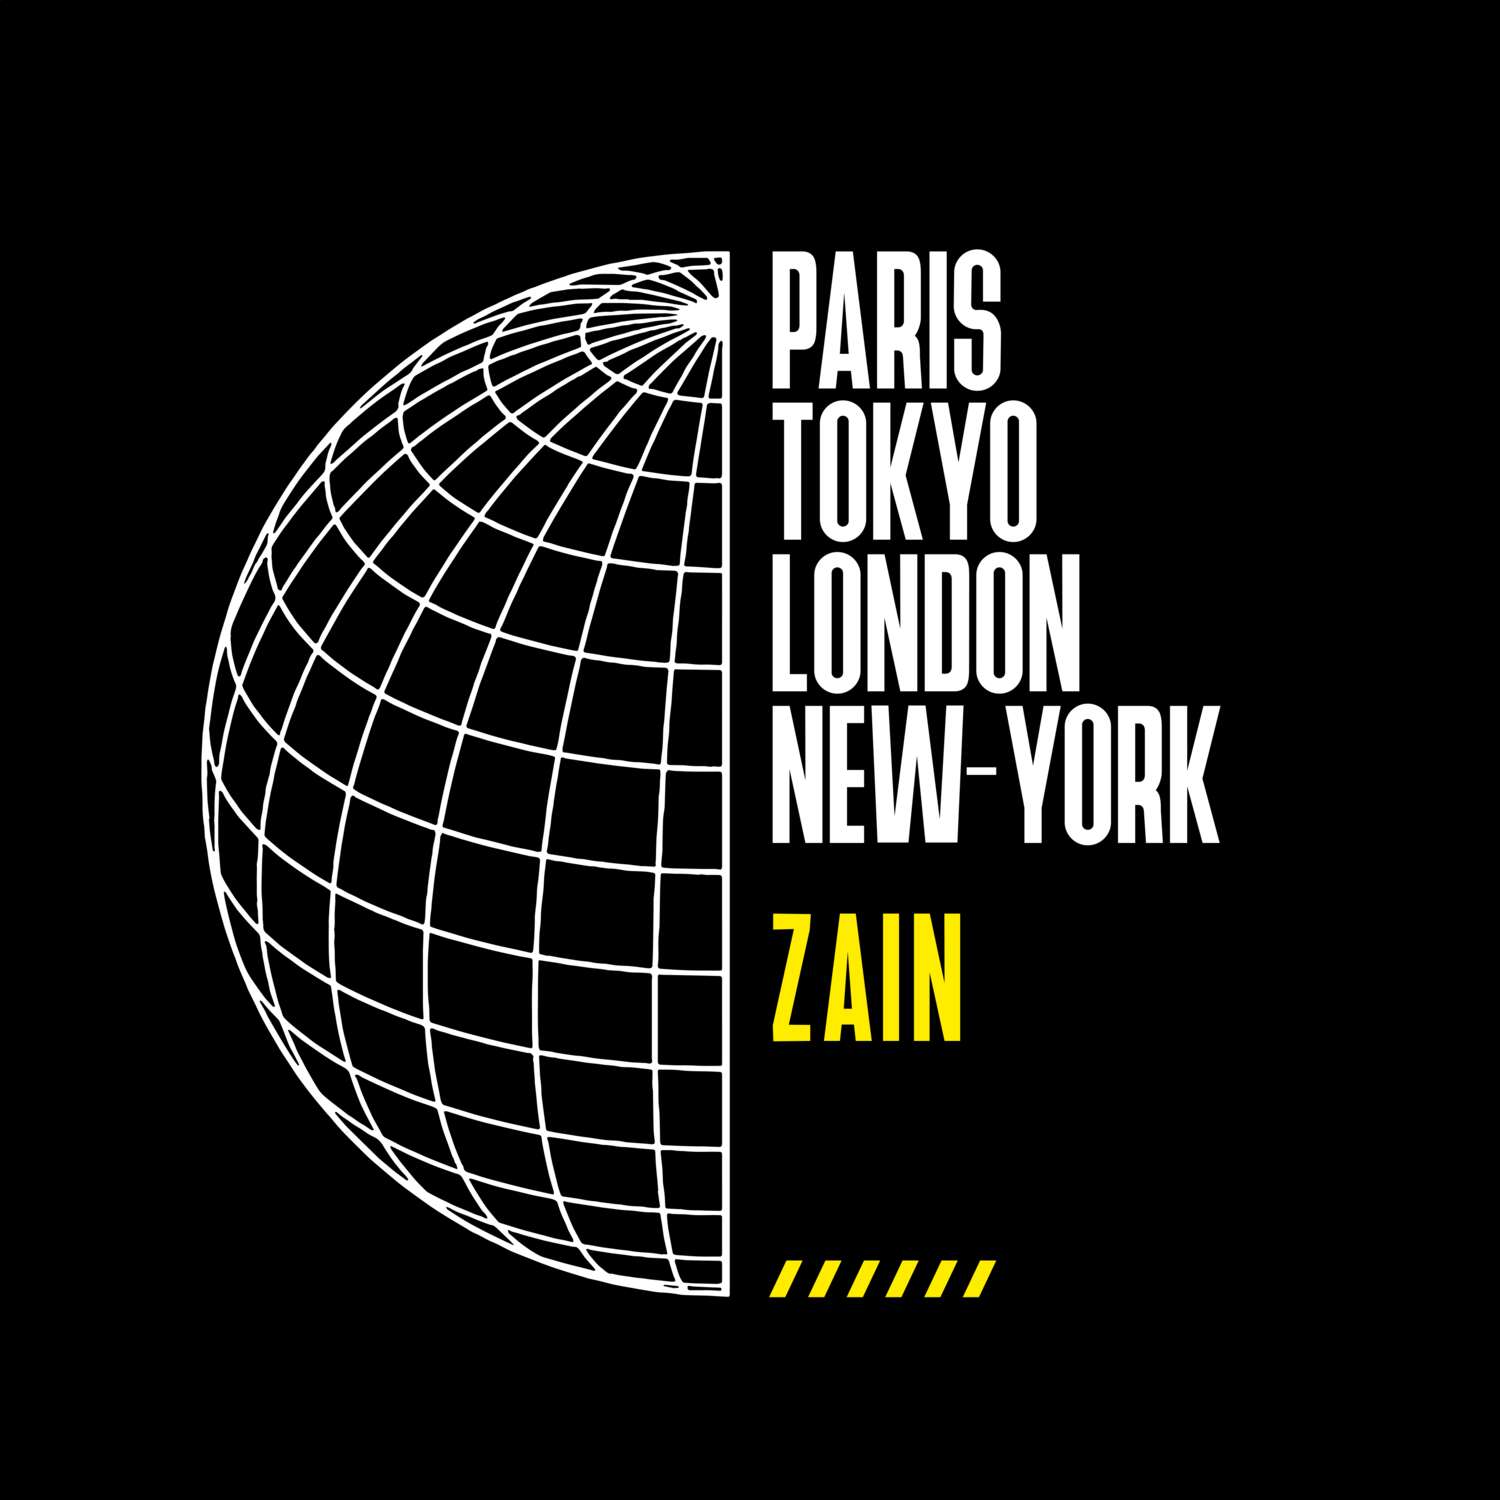 Zain T-Shirt »Paris Tokyo London«